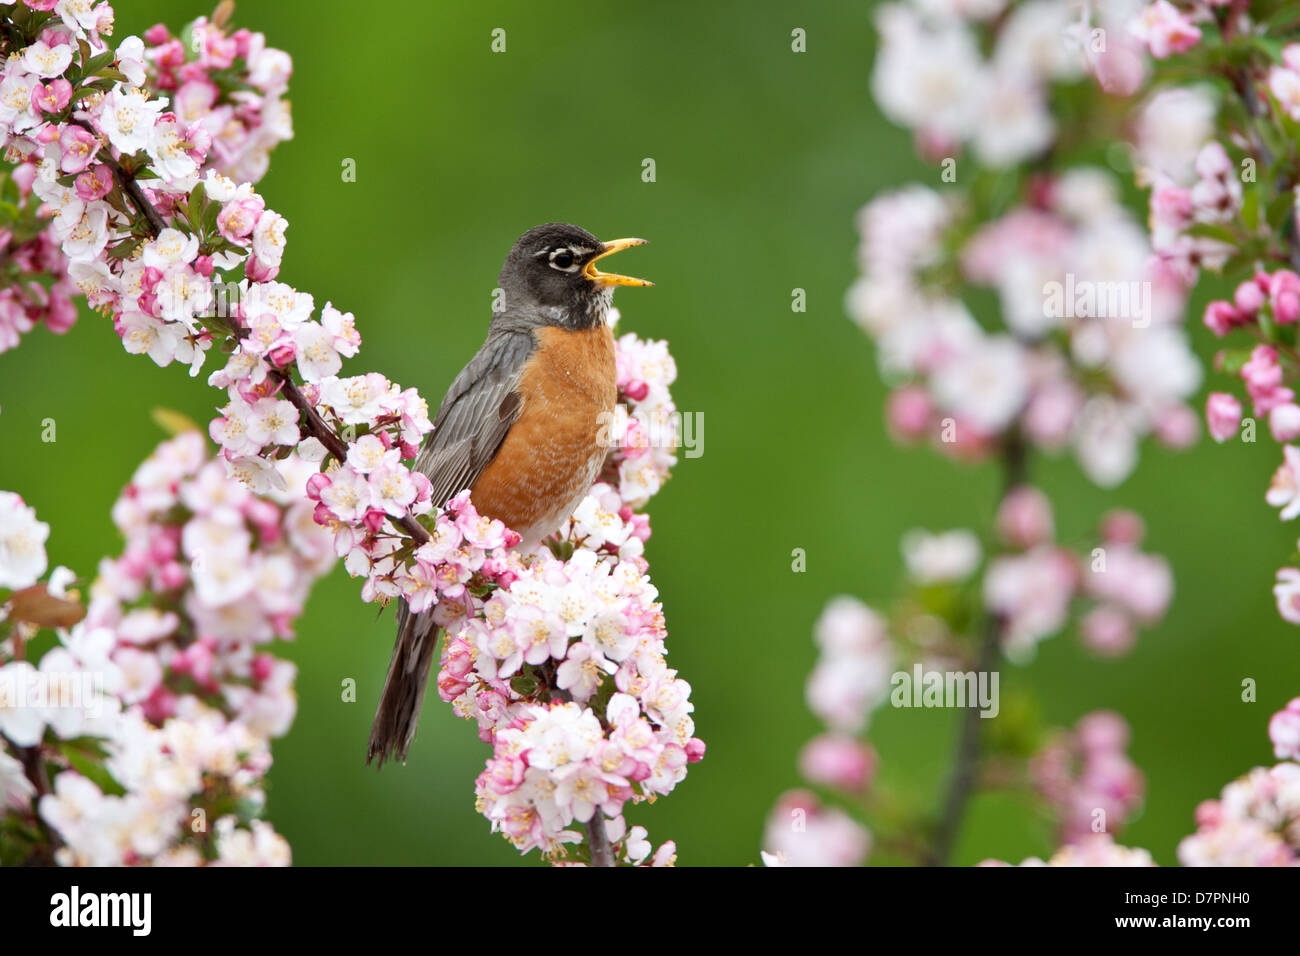 American Robin Singing in Crabapple Tree bird songbird Ornithology Science Nature Wildlife Environment Stock Photo